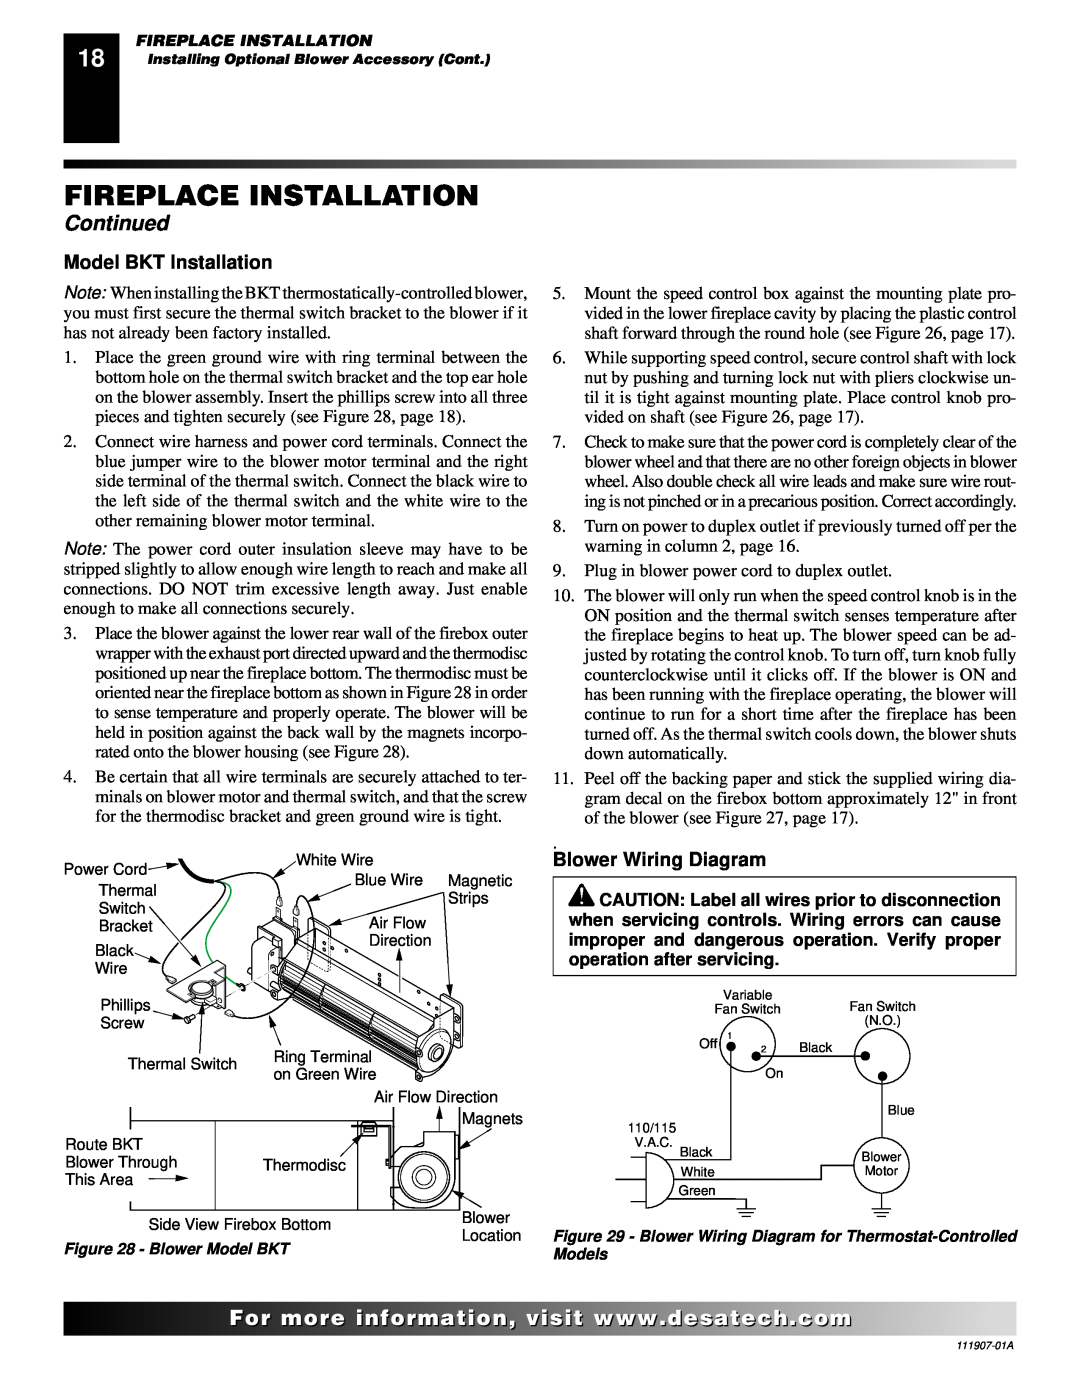 Desa (V)V42ENA(1), (V)V42EPA(1) Model BKT Installation, Blower Wiring Diagram, Fireplace Installation, Continued 